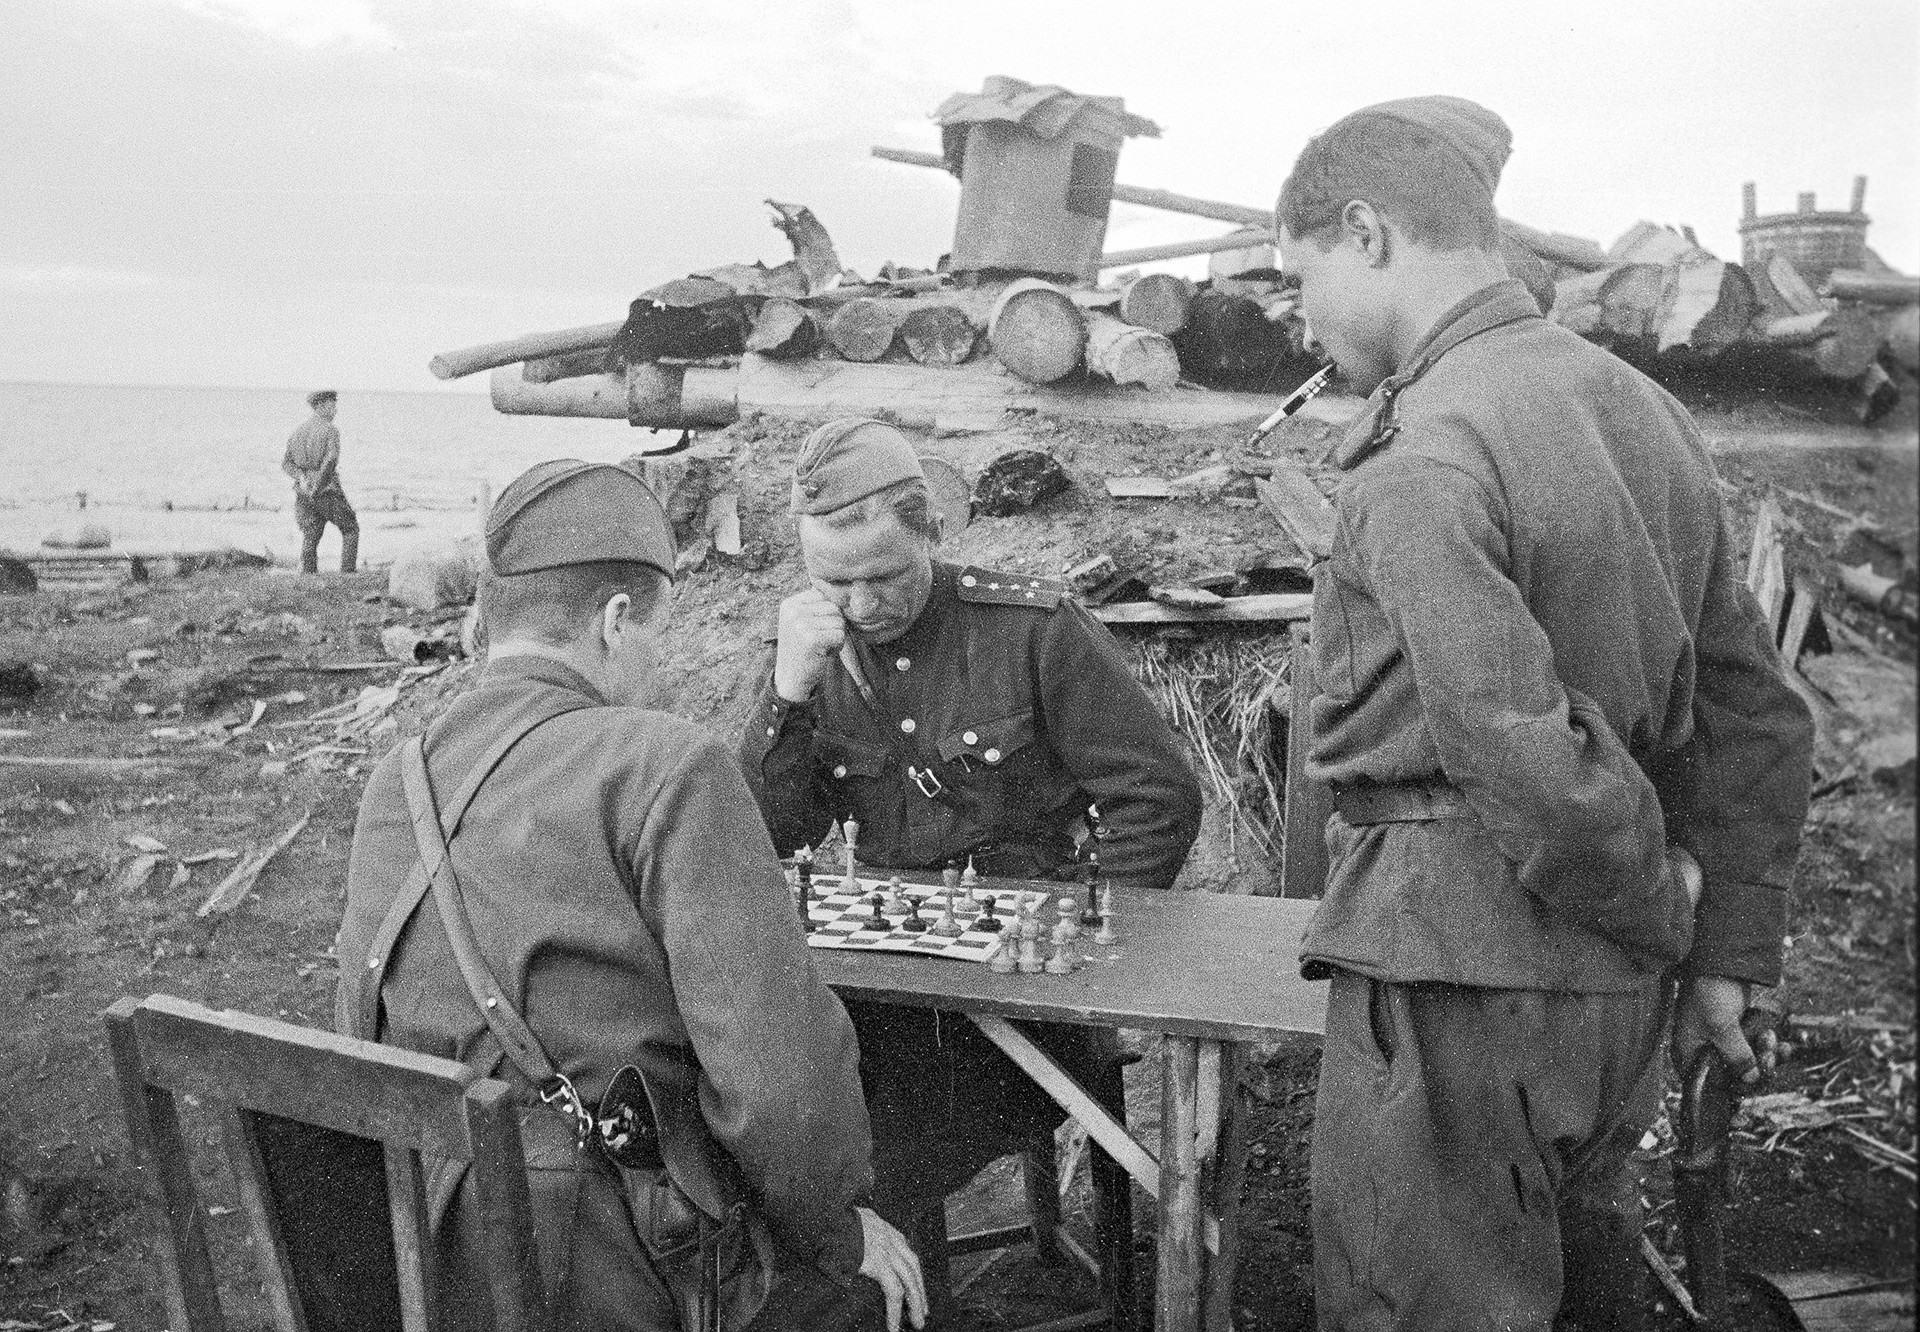 Partija šaha na obali jezera Iljmenj, 1943.

